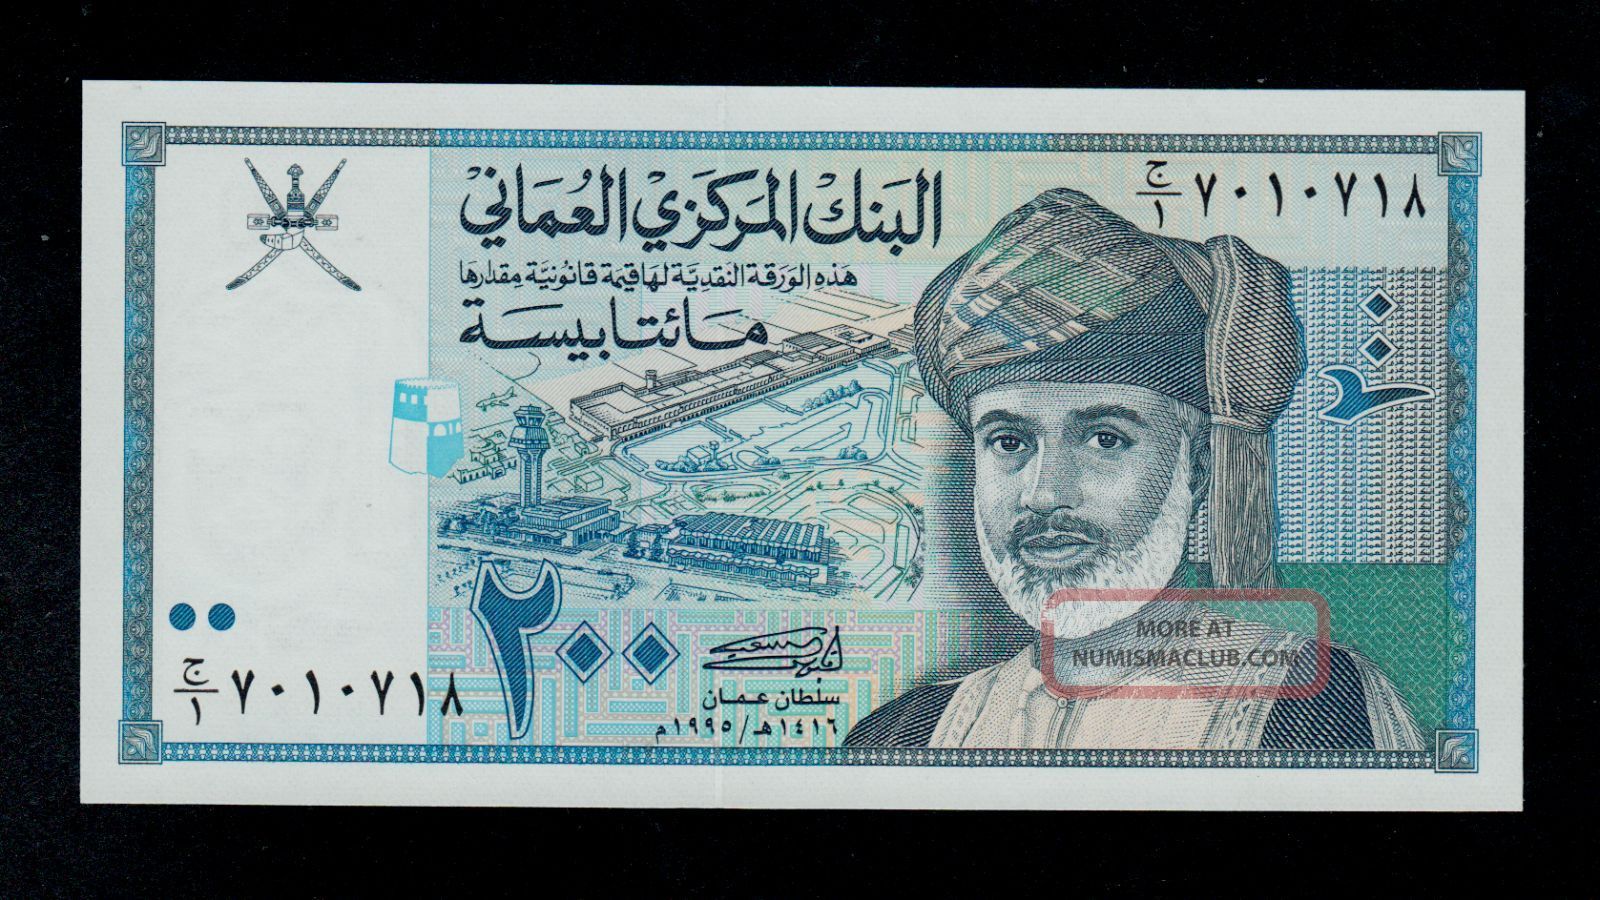 Oman 200 Baisa 1995 Pick 32 Unc. Asia photo